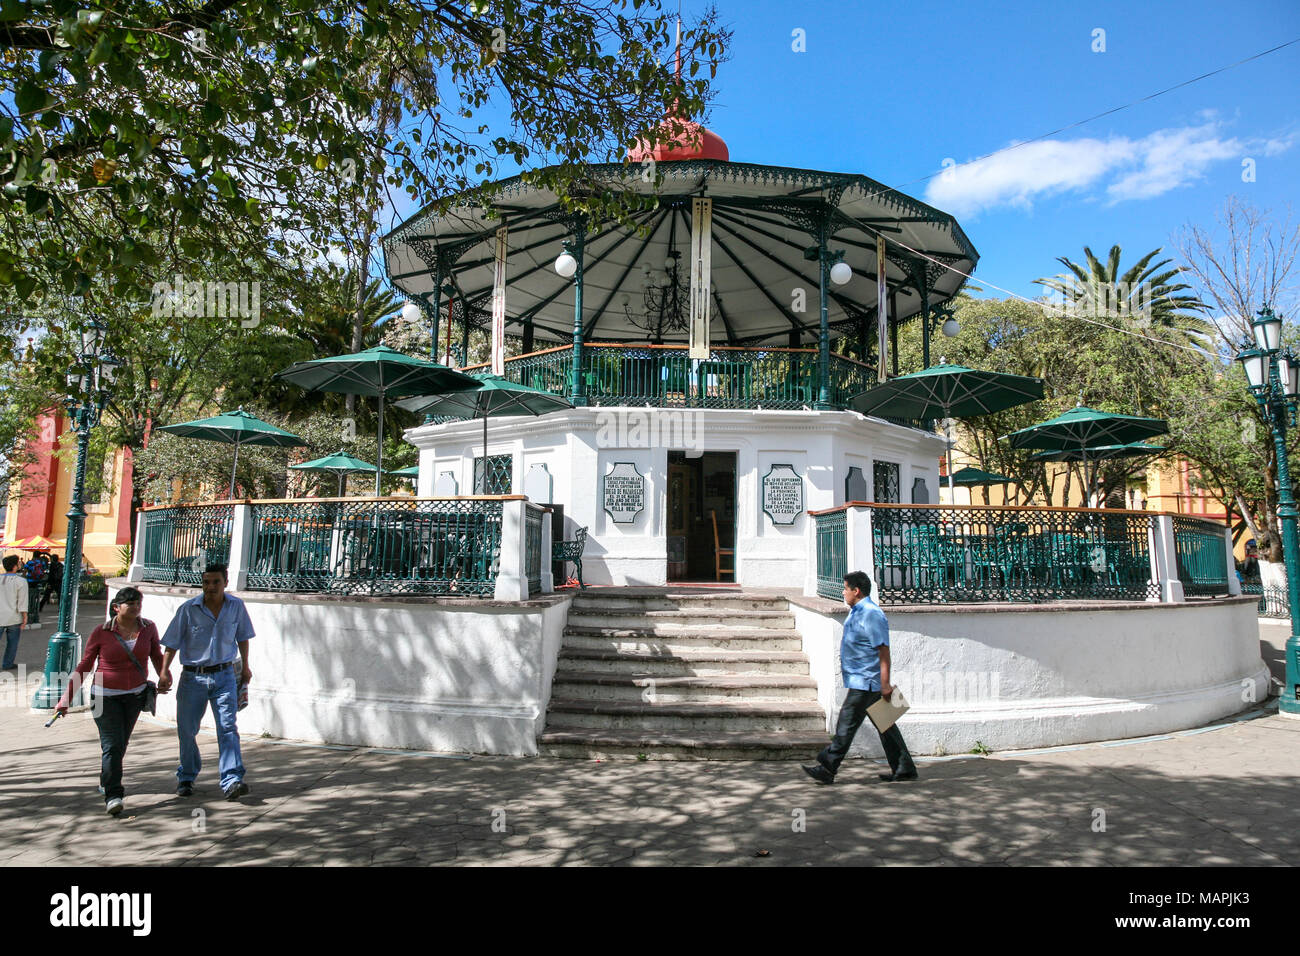 SAN CRISTOBAL DE LAS CASAS, MEXICO - Pavilion on a Zocalo, central square  in San Cristobal De las Casas, Mexico. Stock Photo